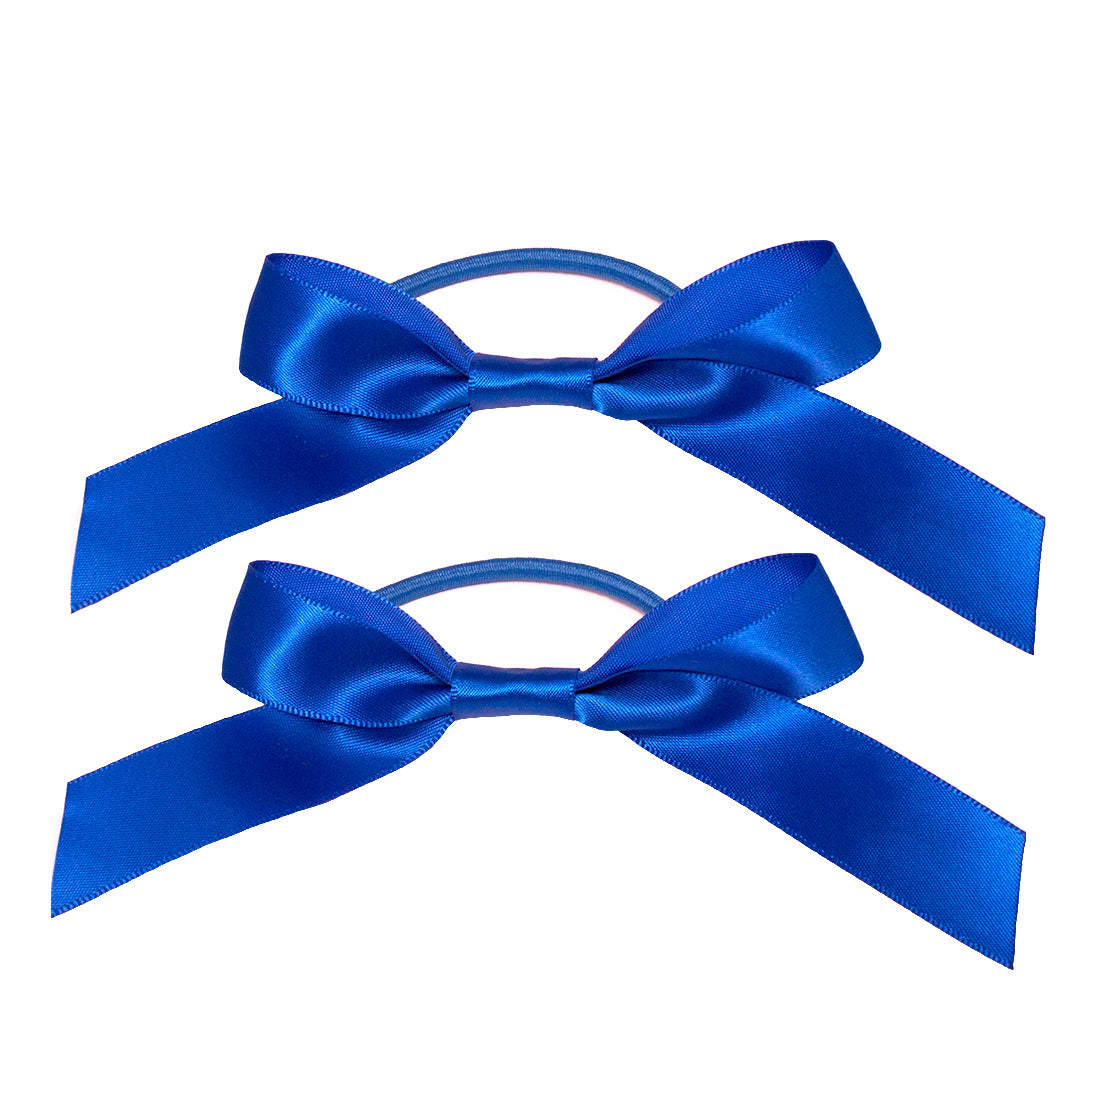 Mia® Spirit Satin Ribbon Bow Ponytailer Set - hair accessories - royal blue color - designed by #MiaKaminski of Mia Beauty